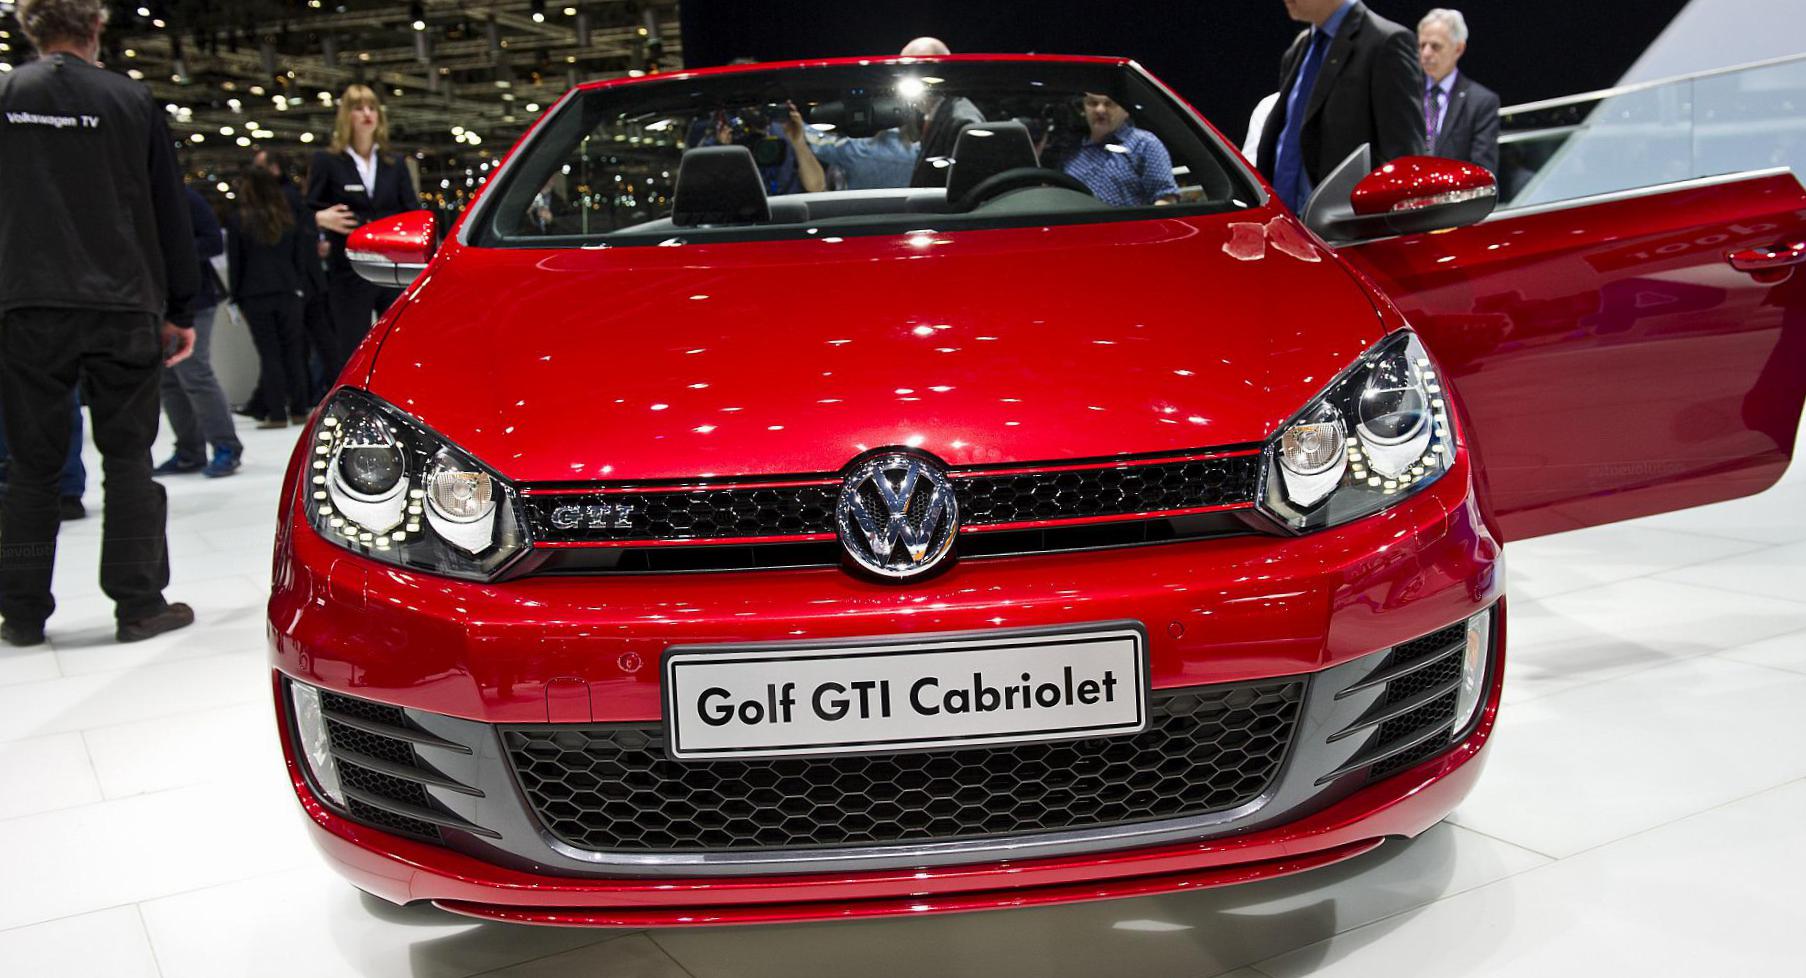 Golf GTI Cabriolet Volkswagen specs cabriolet